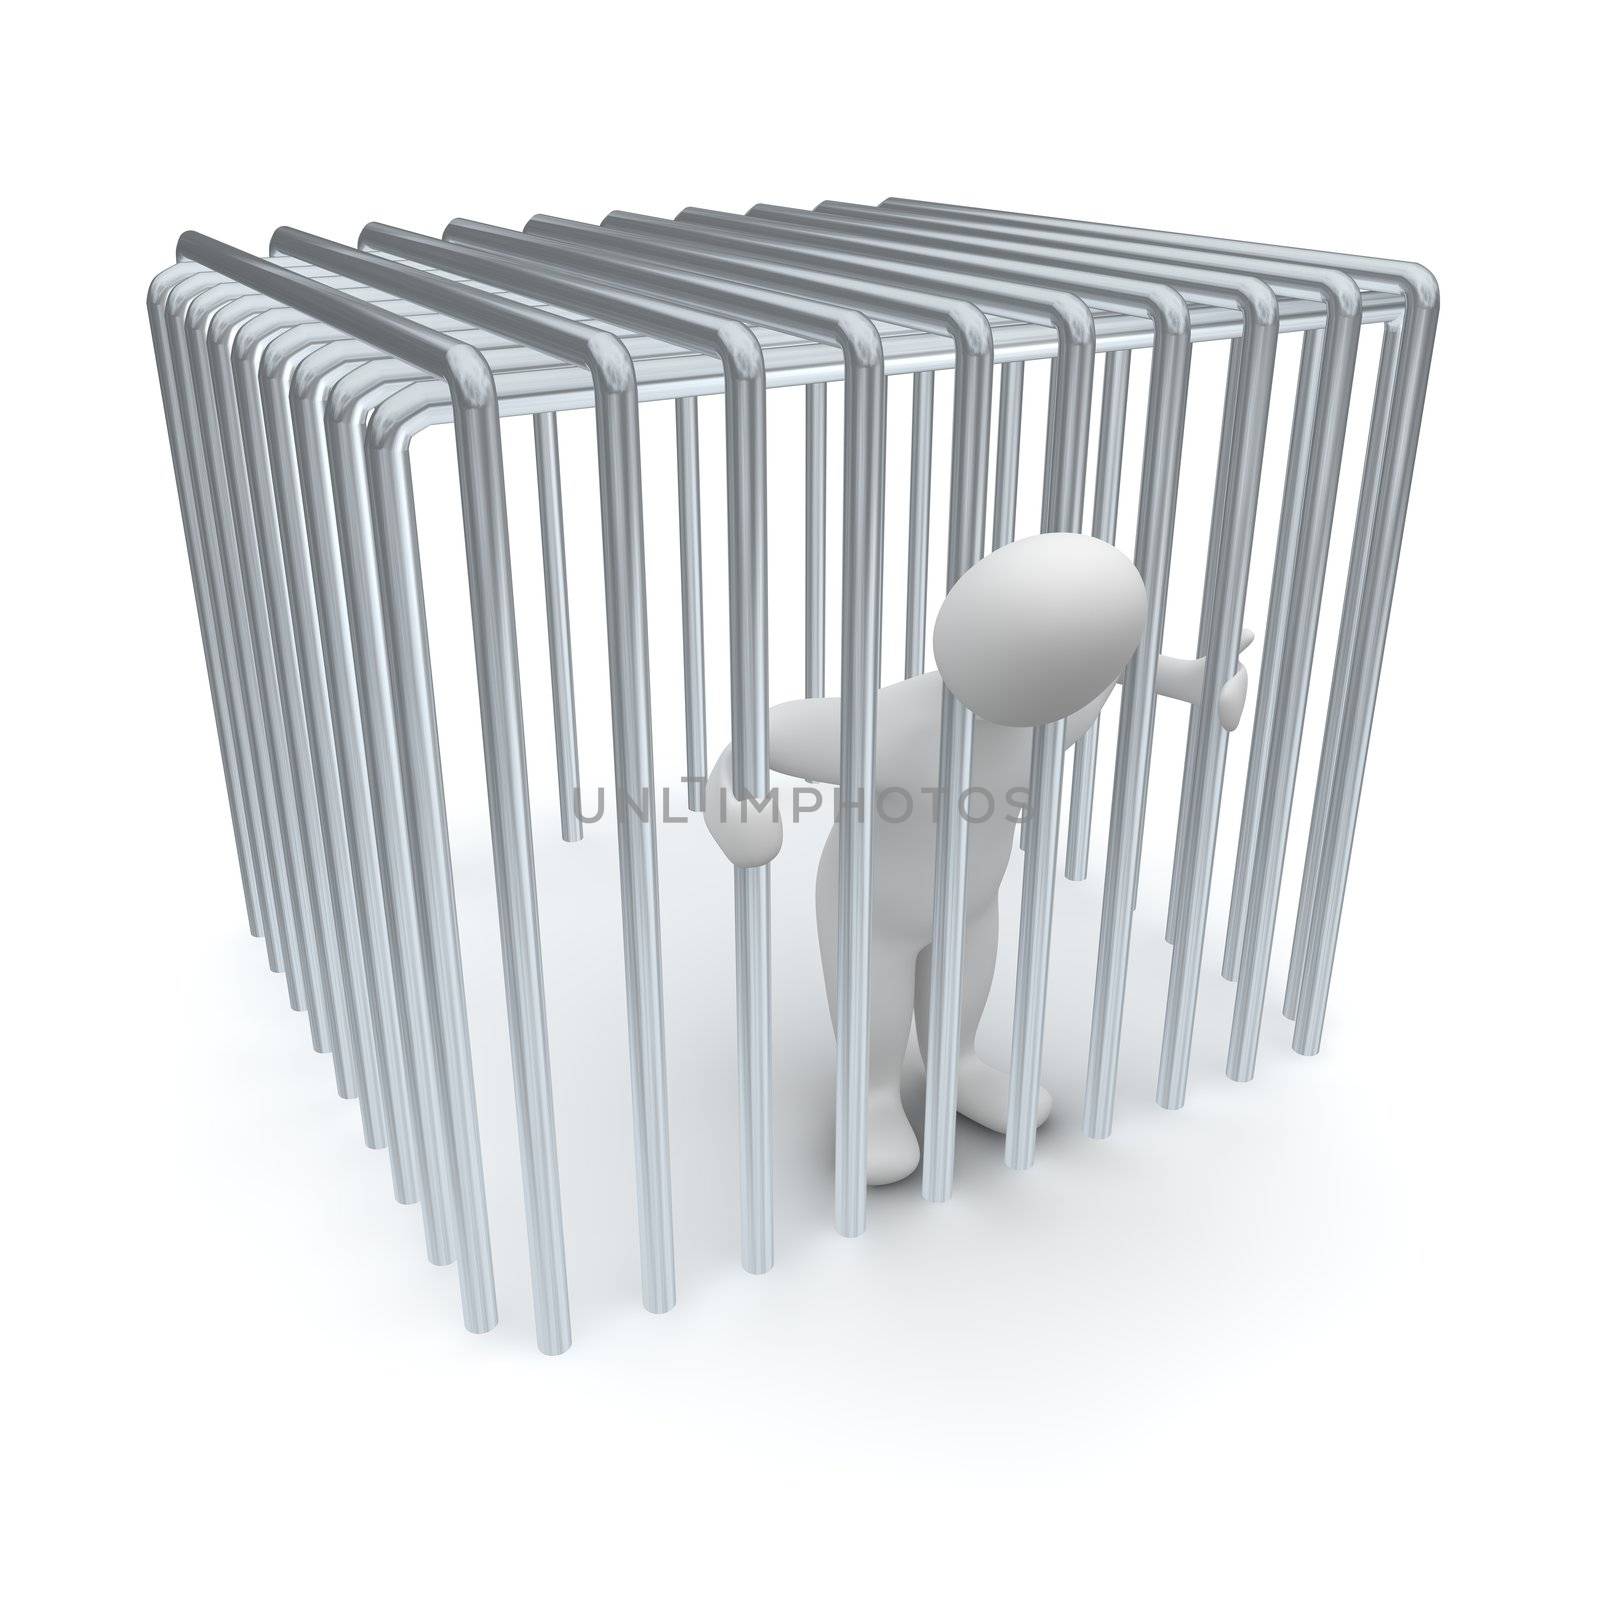 Jailed man in cage. 3d rendered illustration.